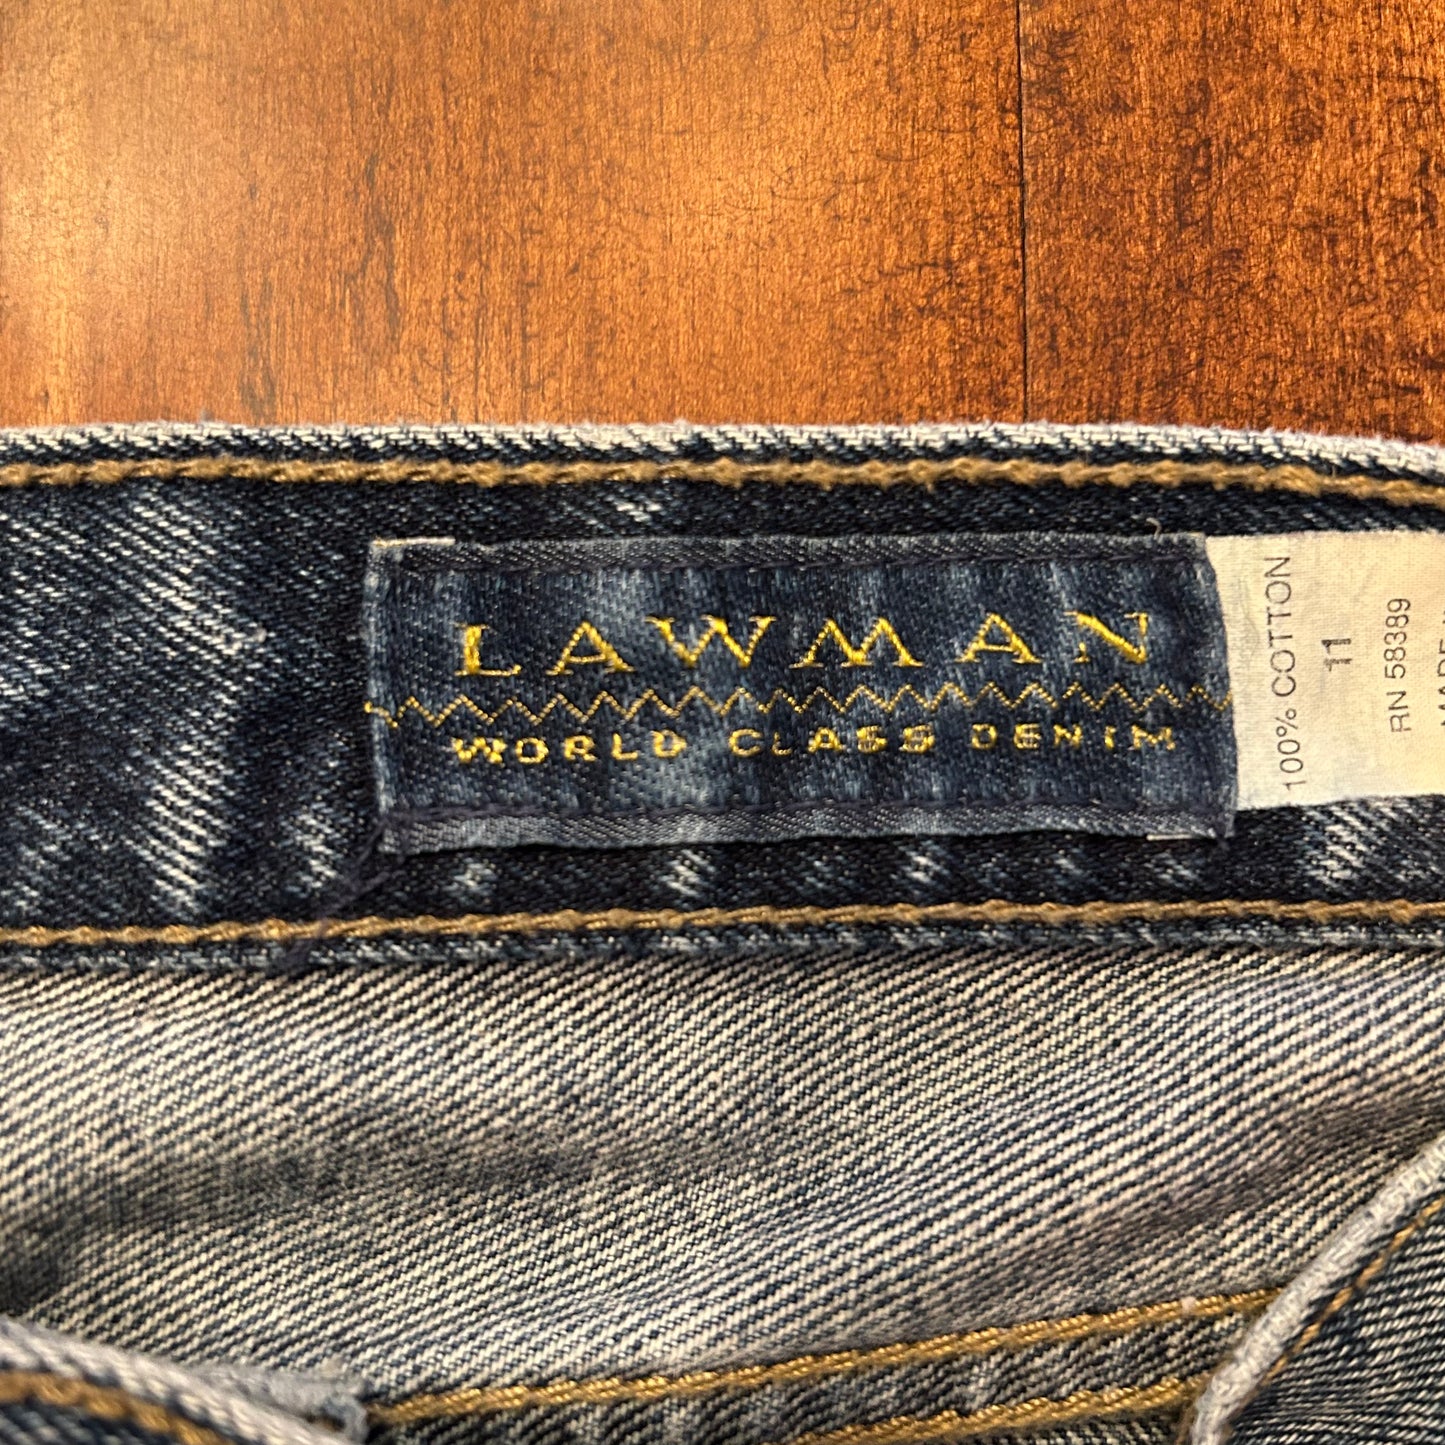 Lawman Jeans Size 29x34